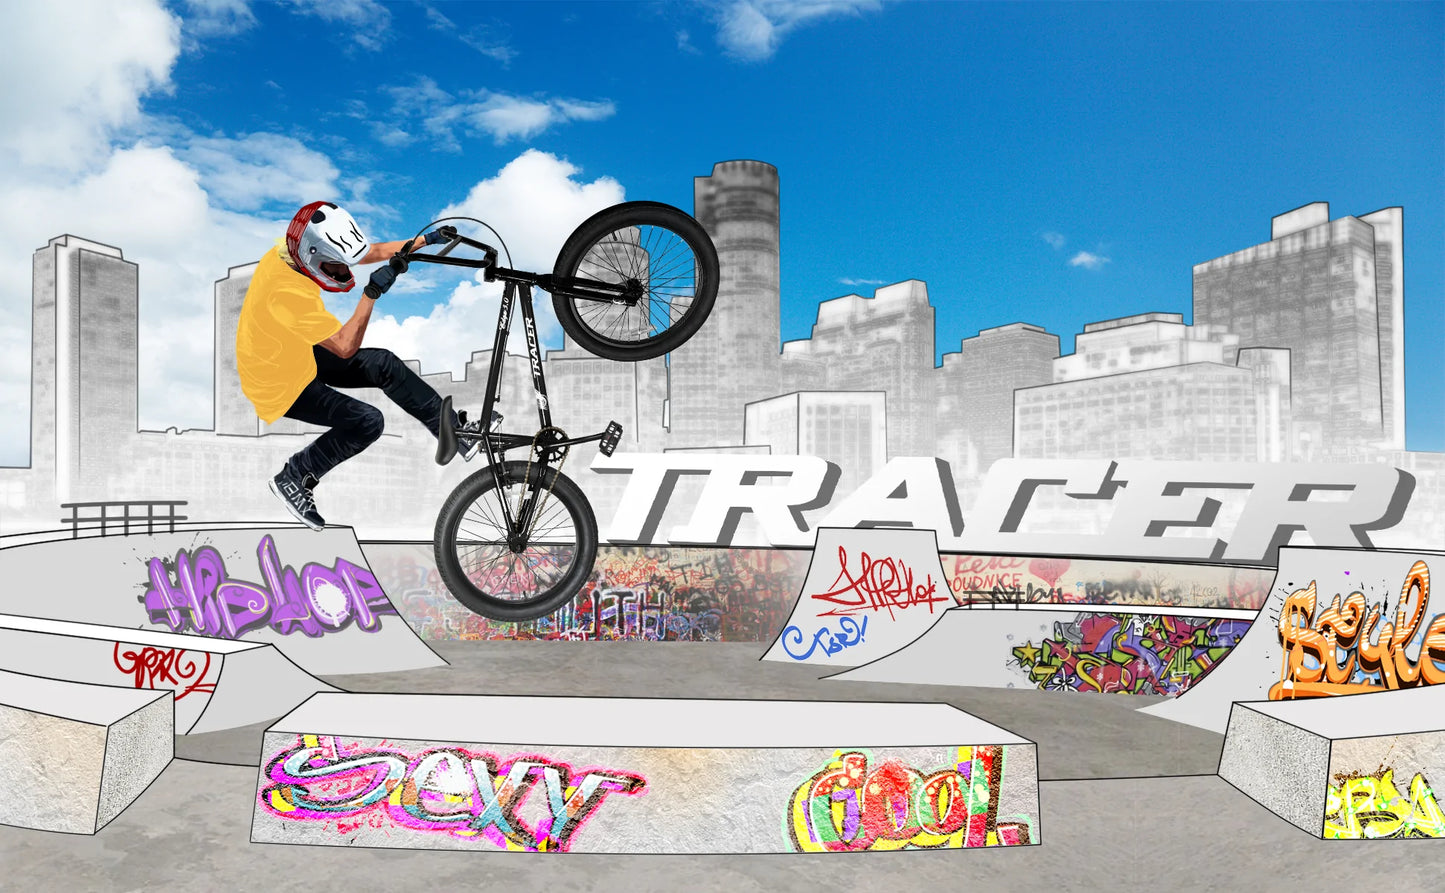 Tracer Edge Freestyle BMX Bike - Black | BMX Bike | Freestyle BMX | Freestyle Bike | BMX Bikes | Kid's BMX Bikes | Bike Lover USA